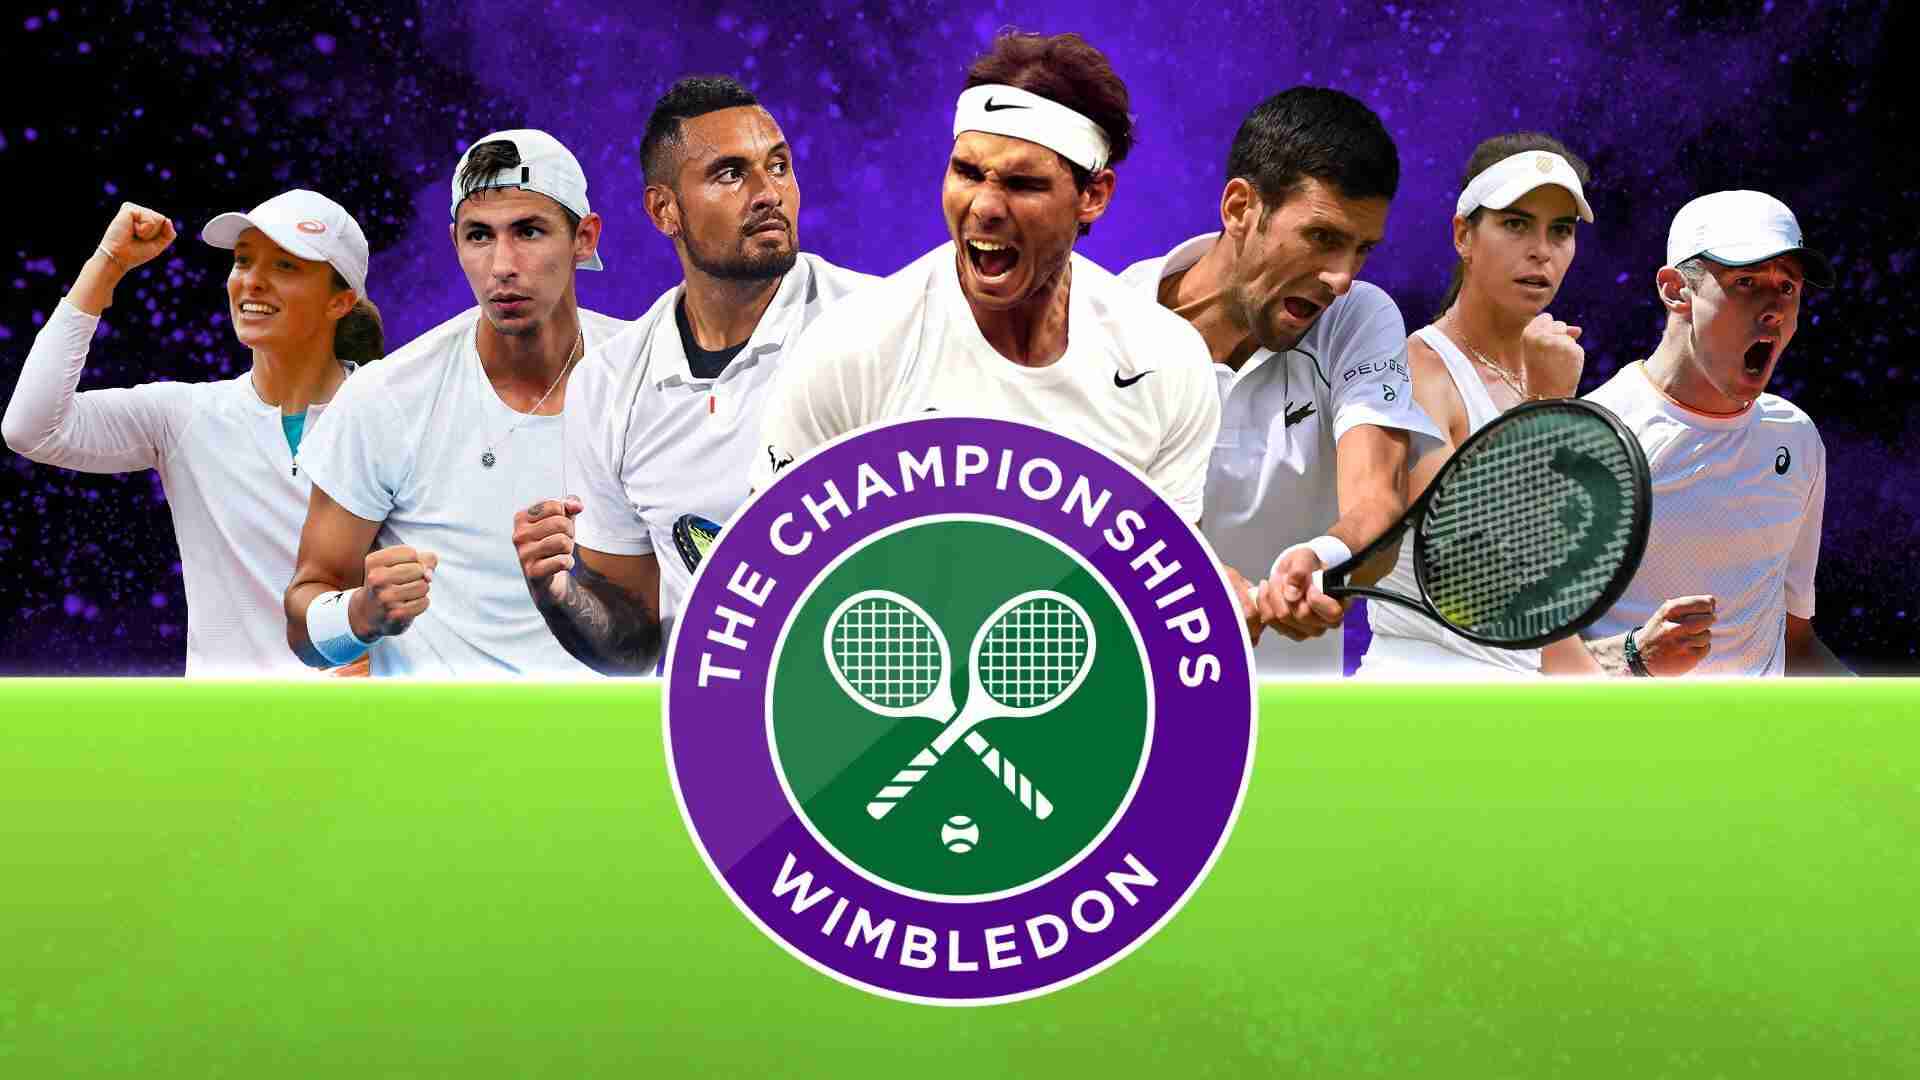 Wimbledon Apostas